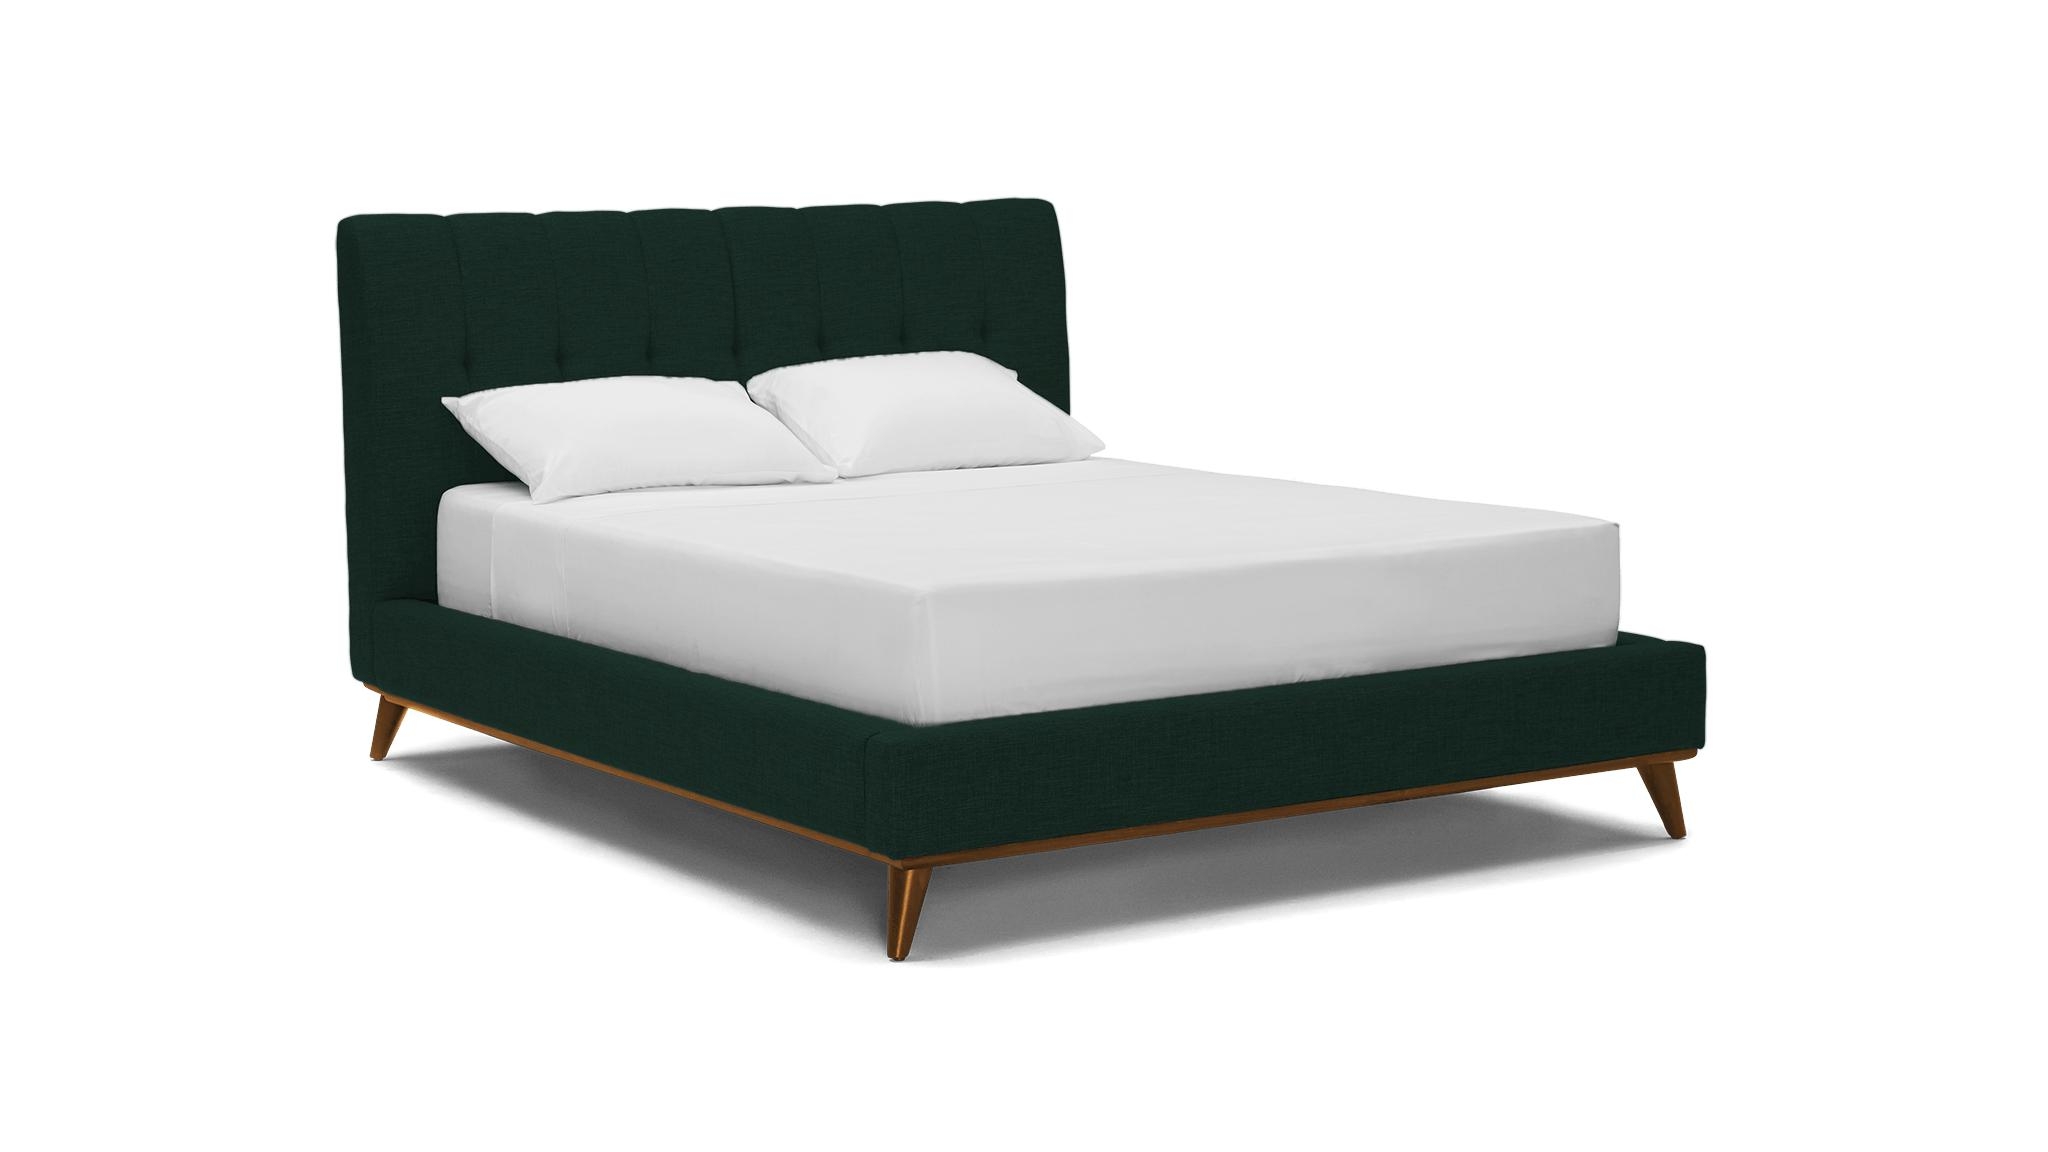 Green Hughes Mid Century Modern Bed - Royale Evergreen - Mocha - Eastern King - Image 1